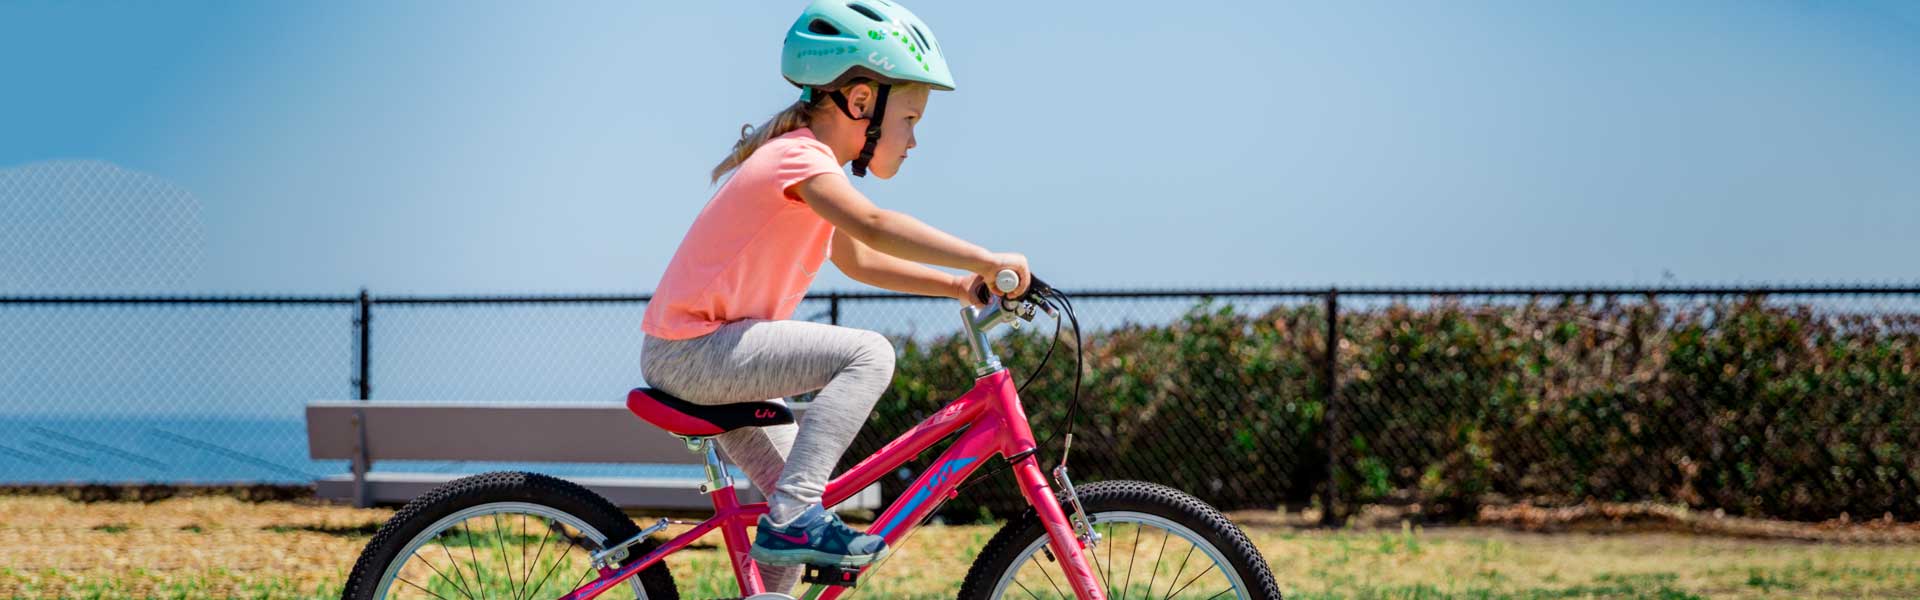 Biking with kids Liv Cycling US